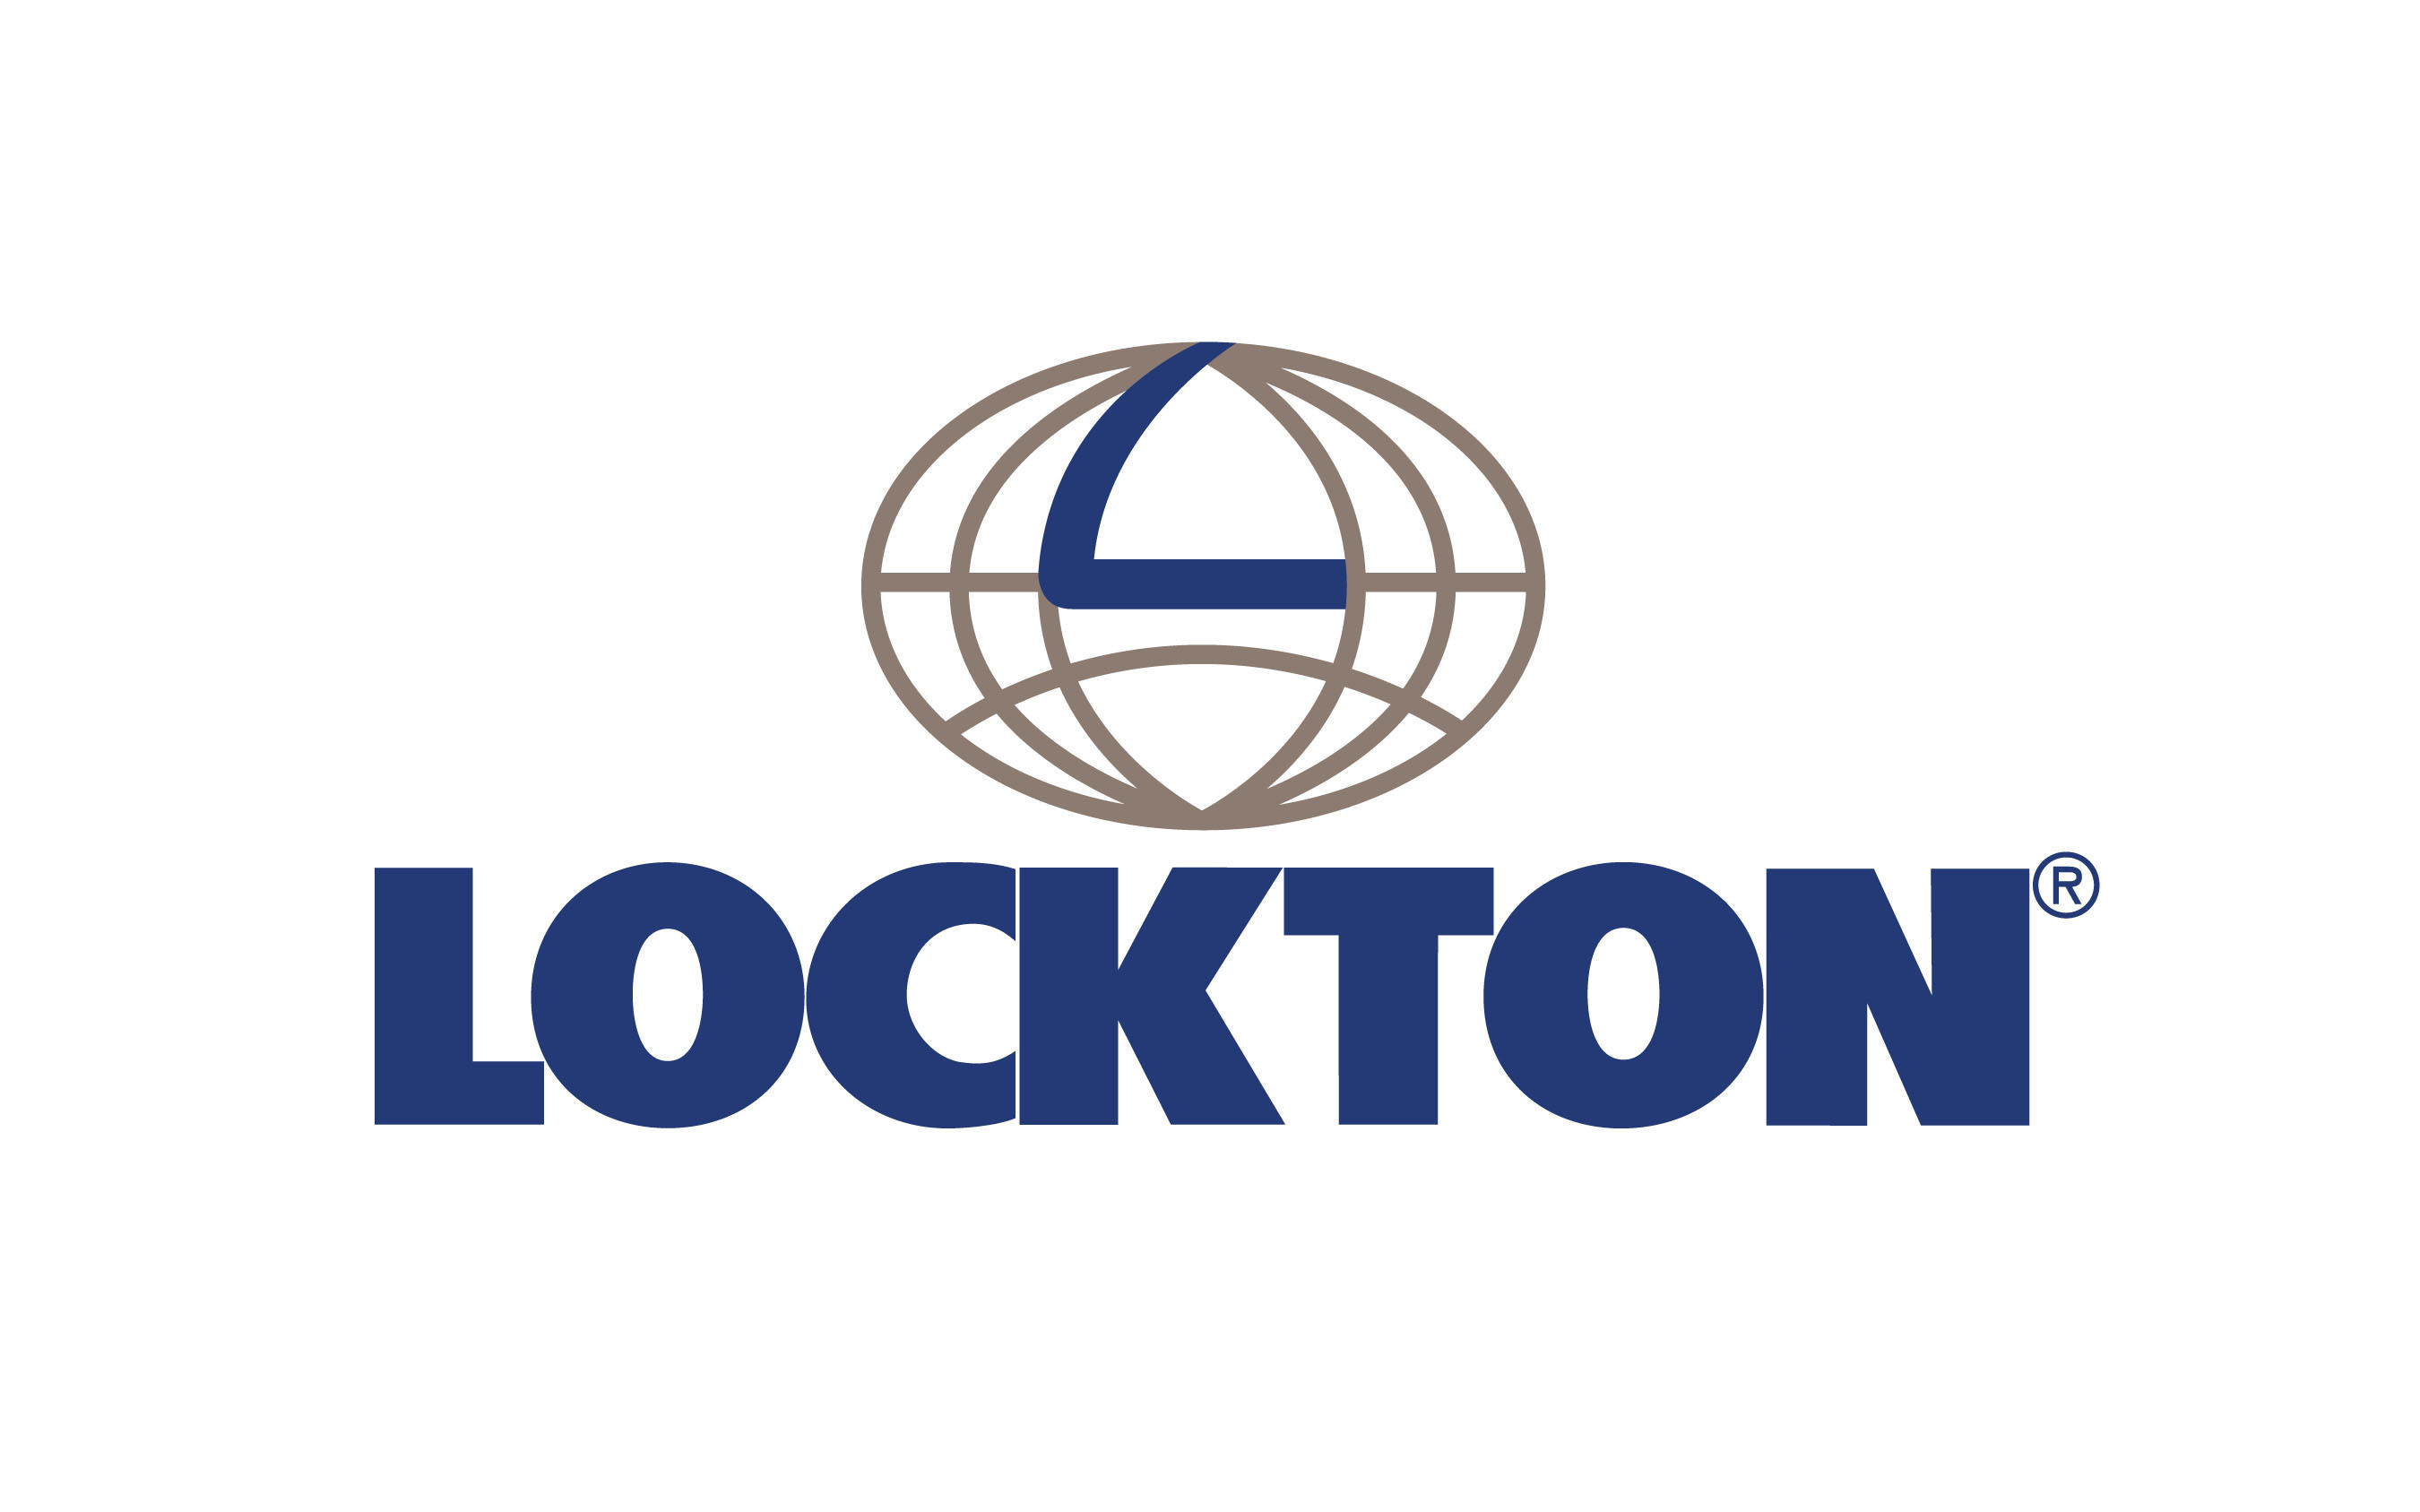 Lockton adds Nicholas King as President of Washington Office